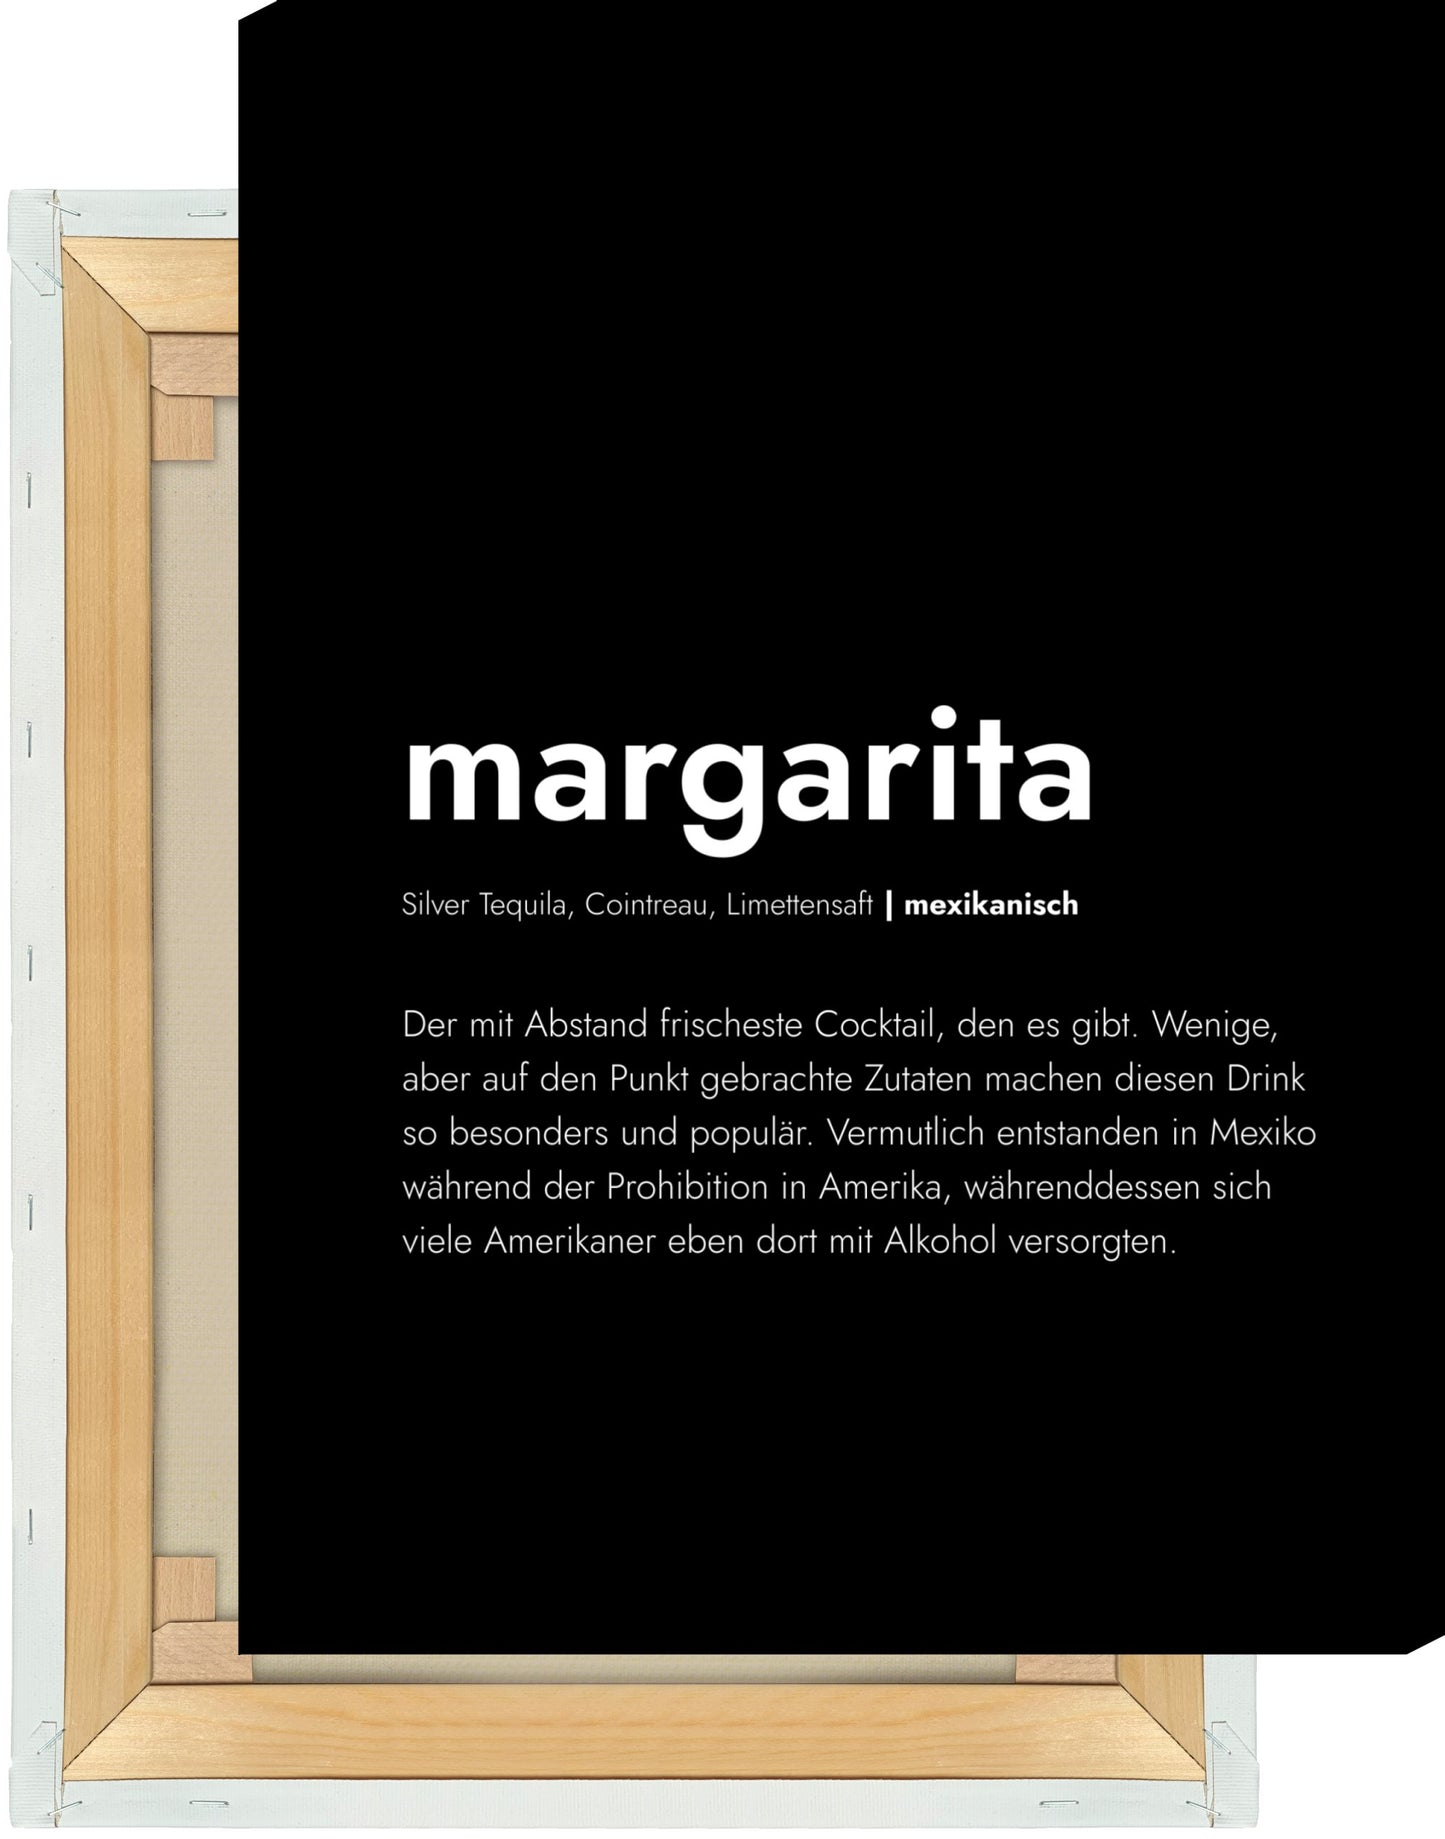 Leinwand Margarita - Definition